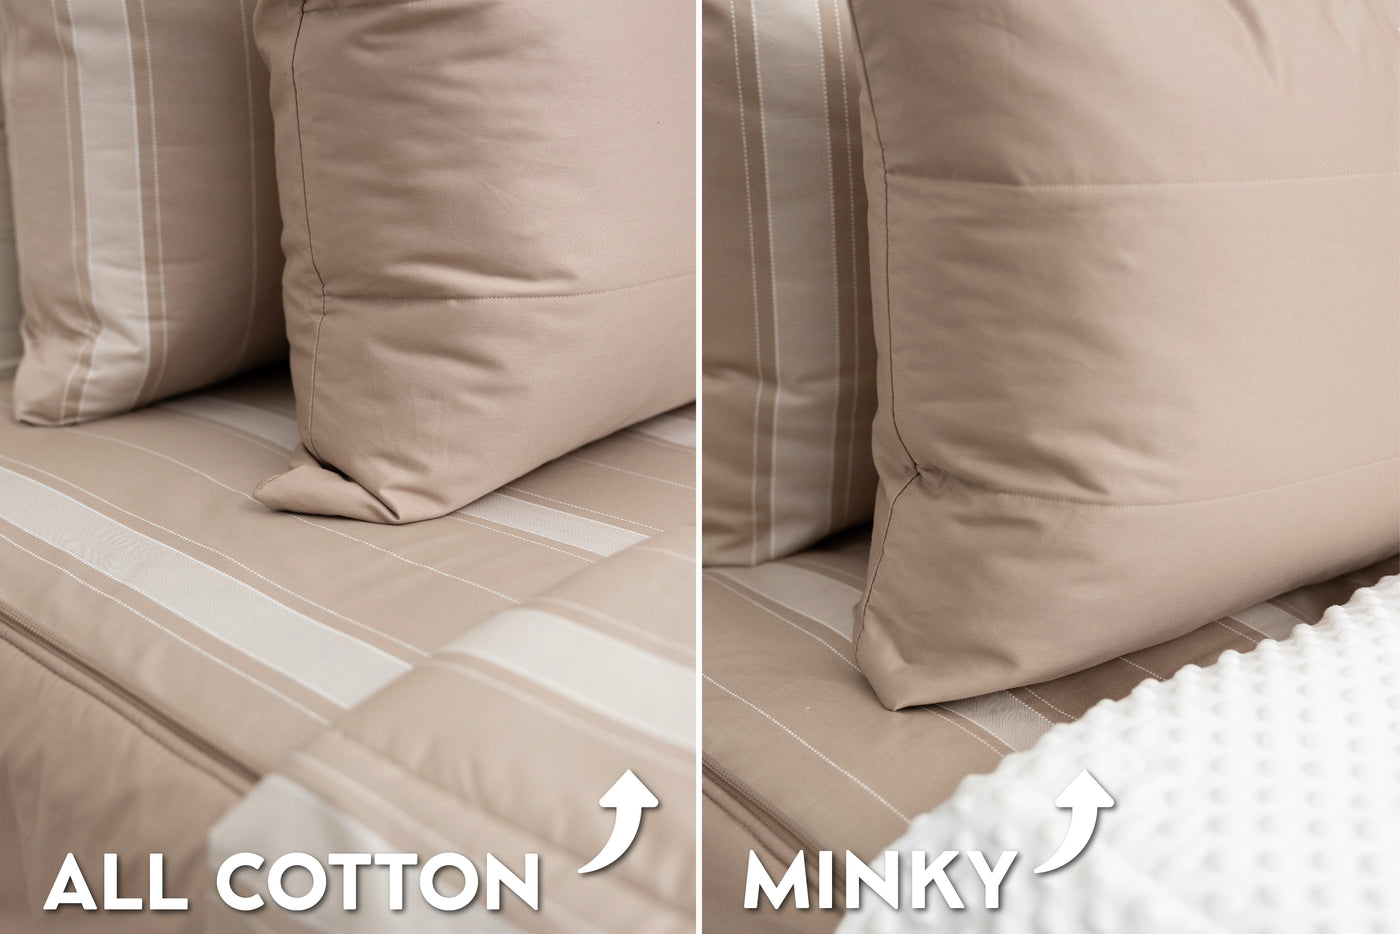 tan zipper bedding with cozy minky interior or cozy cotton interior